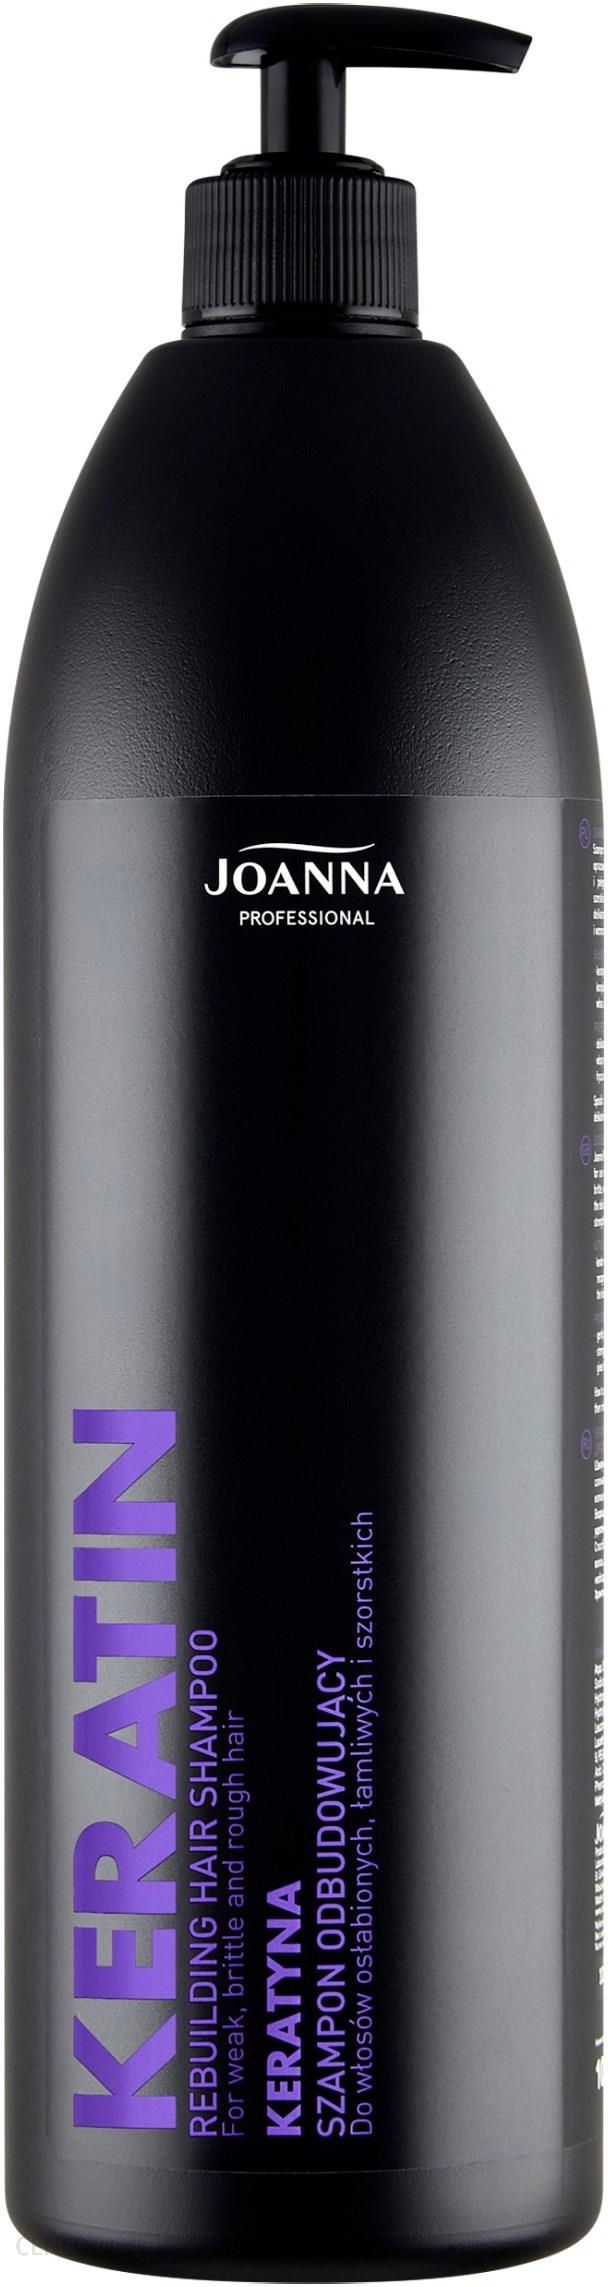 joanna szampon keratin opinie